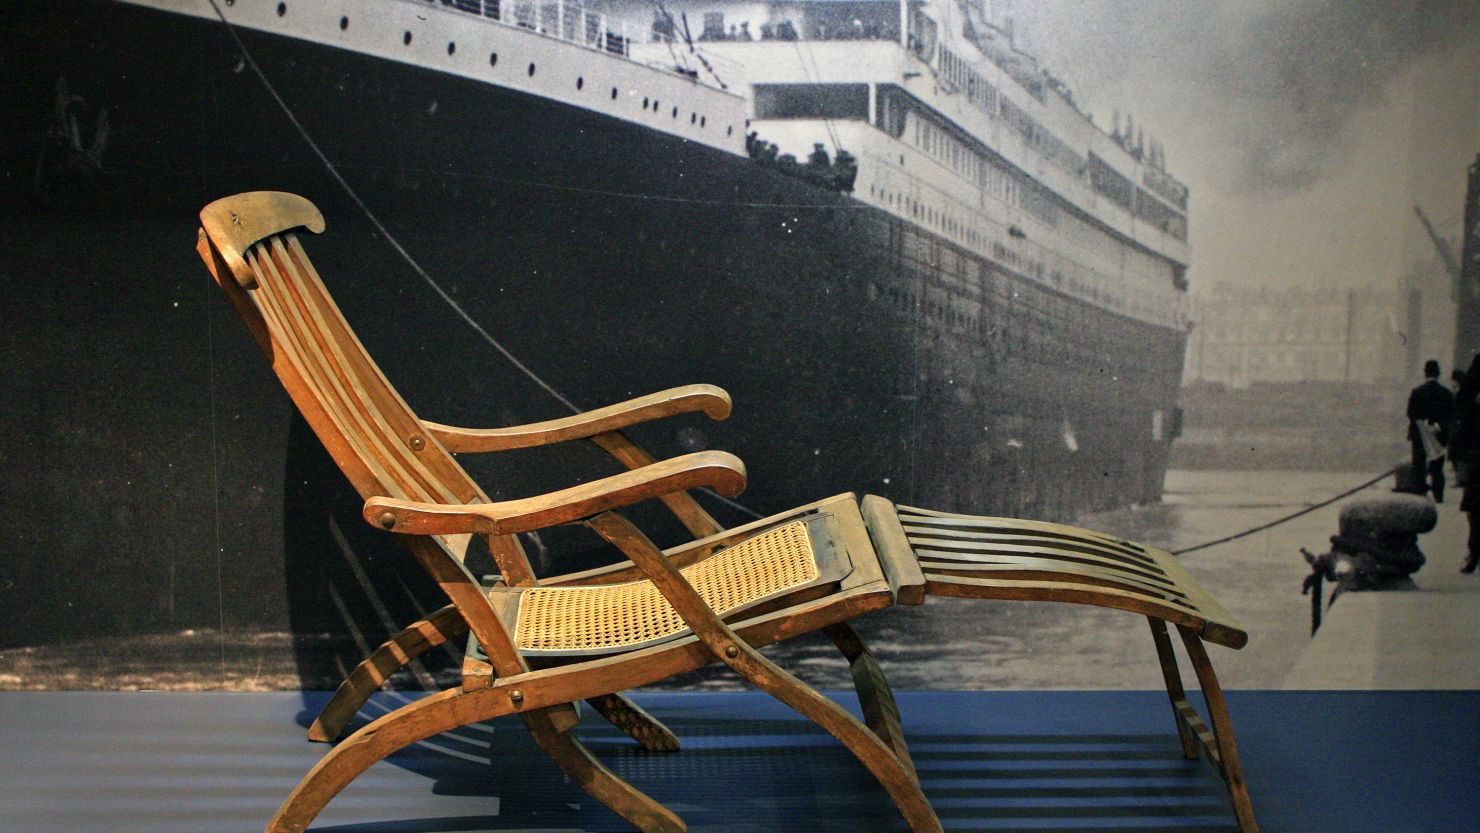 Rare original deck chair from Titanic, the signature artifact of the permanent Titanic exhibit at the Maritime Museum of the Atlantic